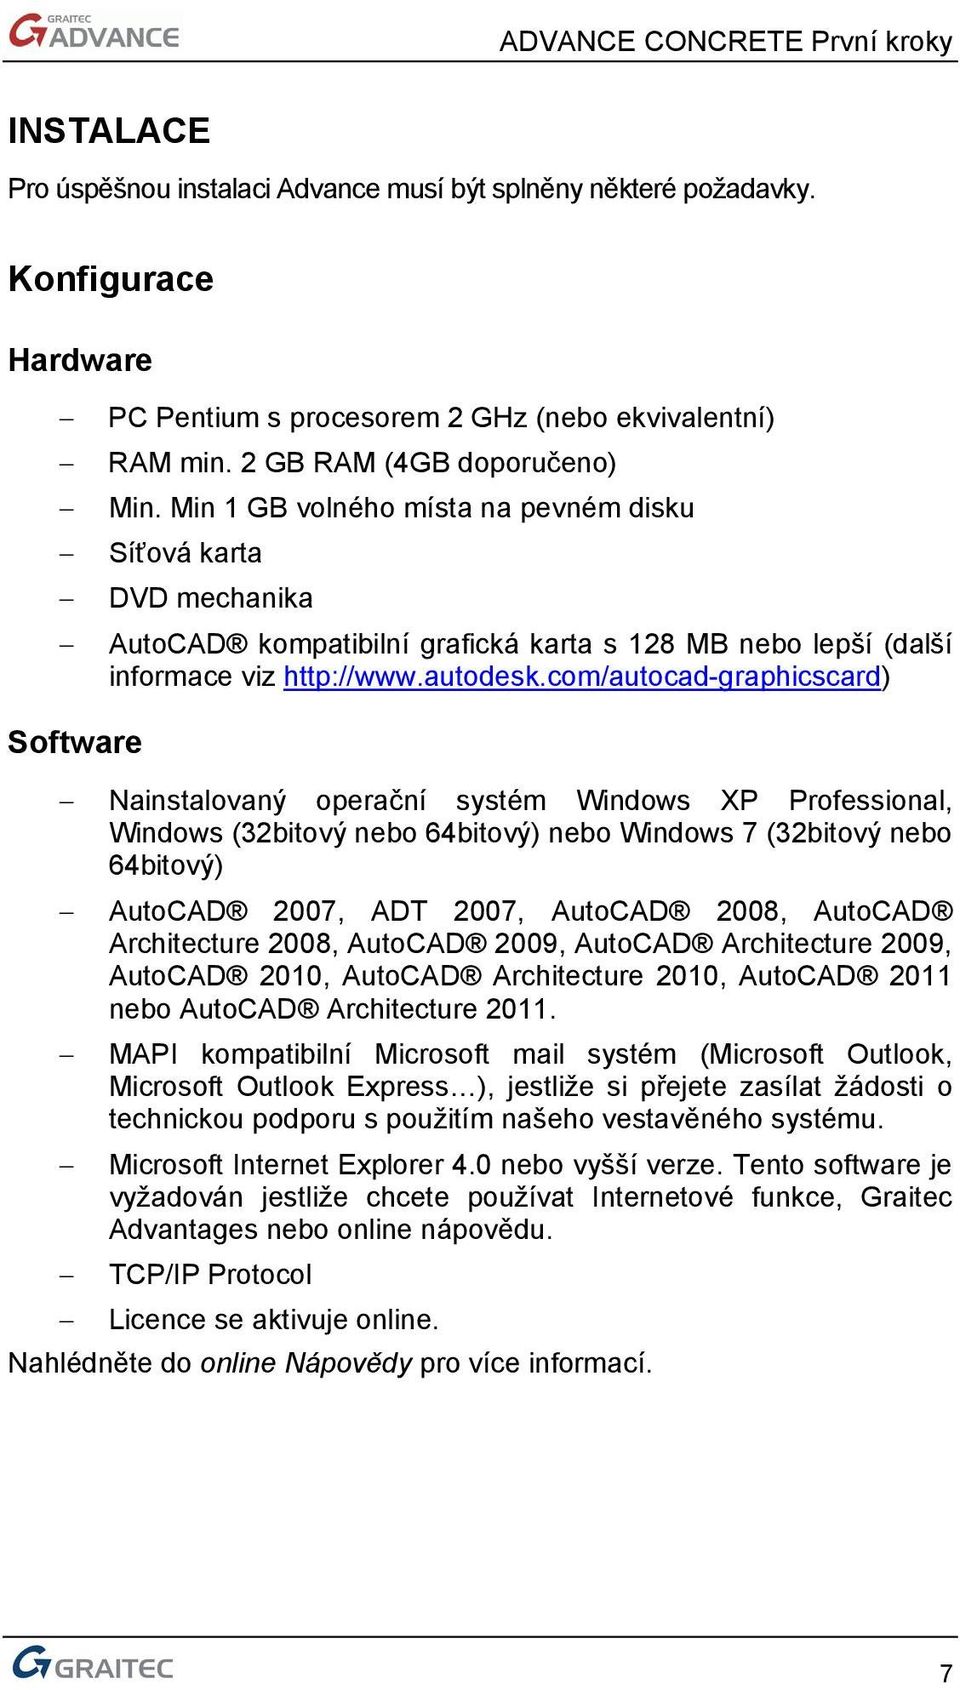 com/autocad-graphicscard) Software Nainstalovaný operační systém Windows XP Professional, Windows (32bitový nebo 64bitový) nebo Windows 7 (32bitový nebo 64bitový) AutoCAD 2007, ADT 2007, AutoCAD